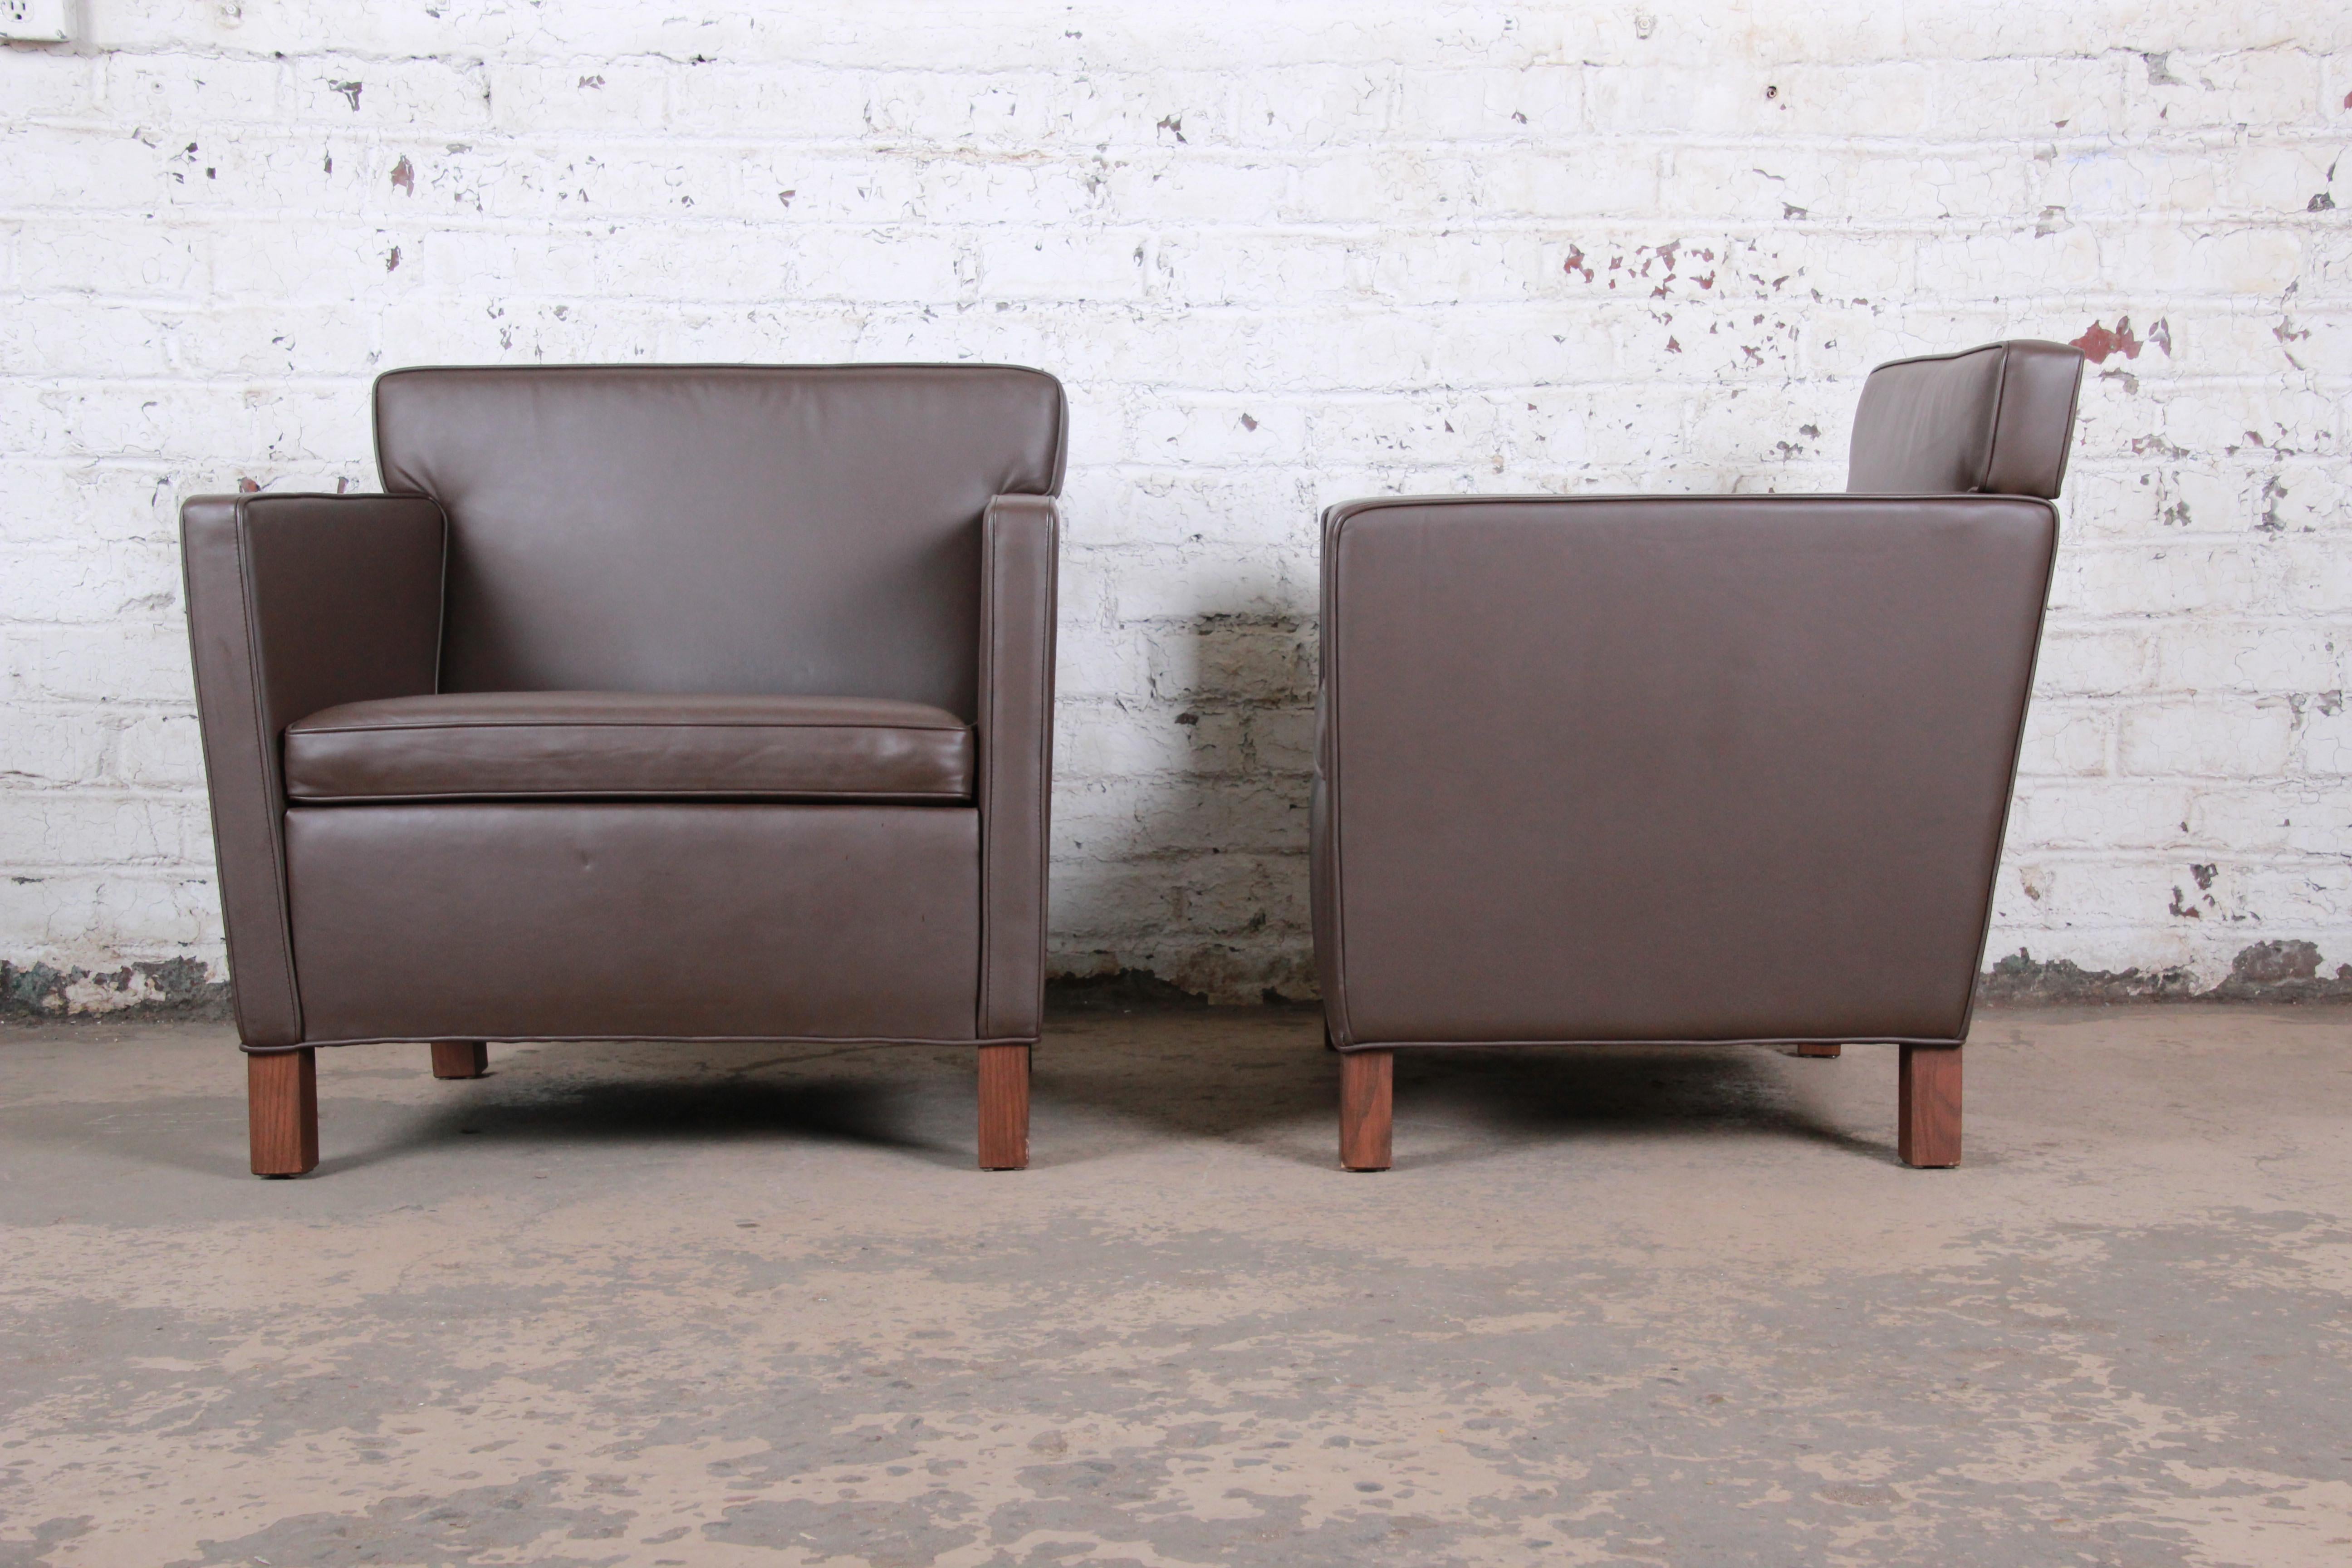 American Ludwig Mies Van Der Rohe for Knoll Studio Krefeld Leather Club Chairs, Pair